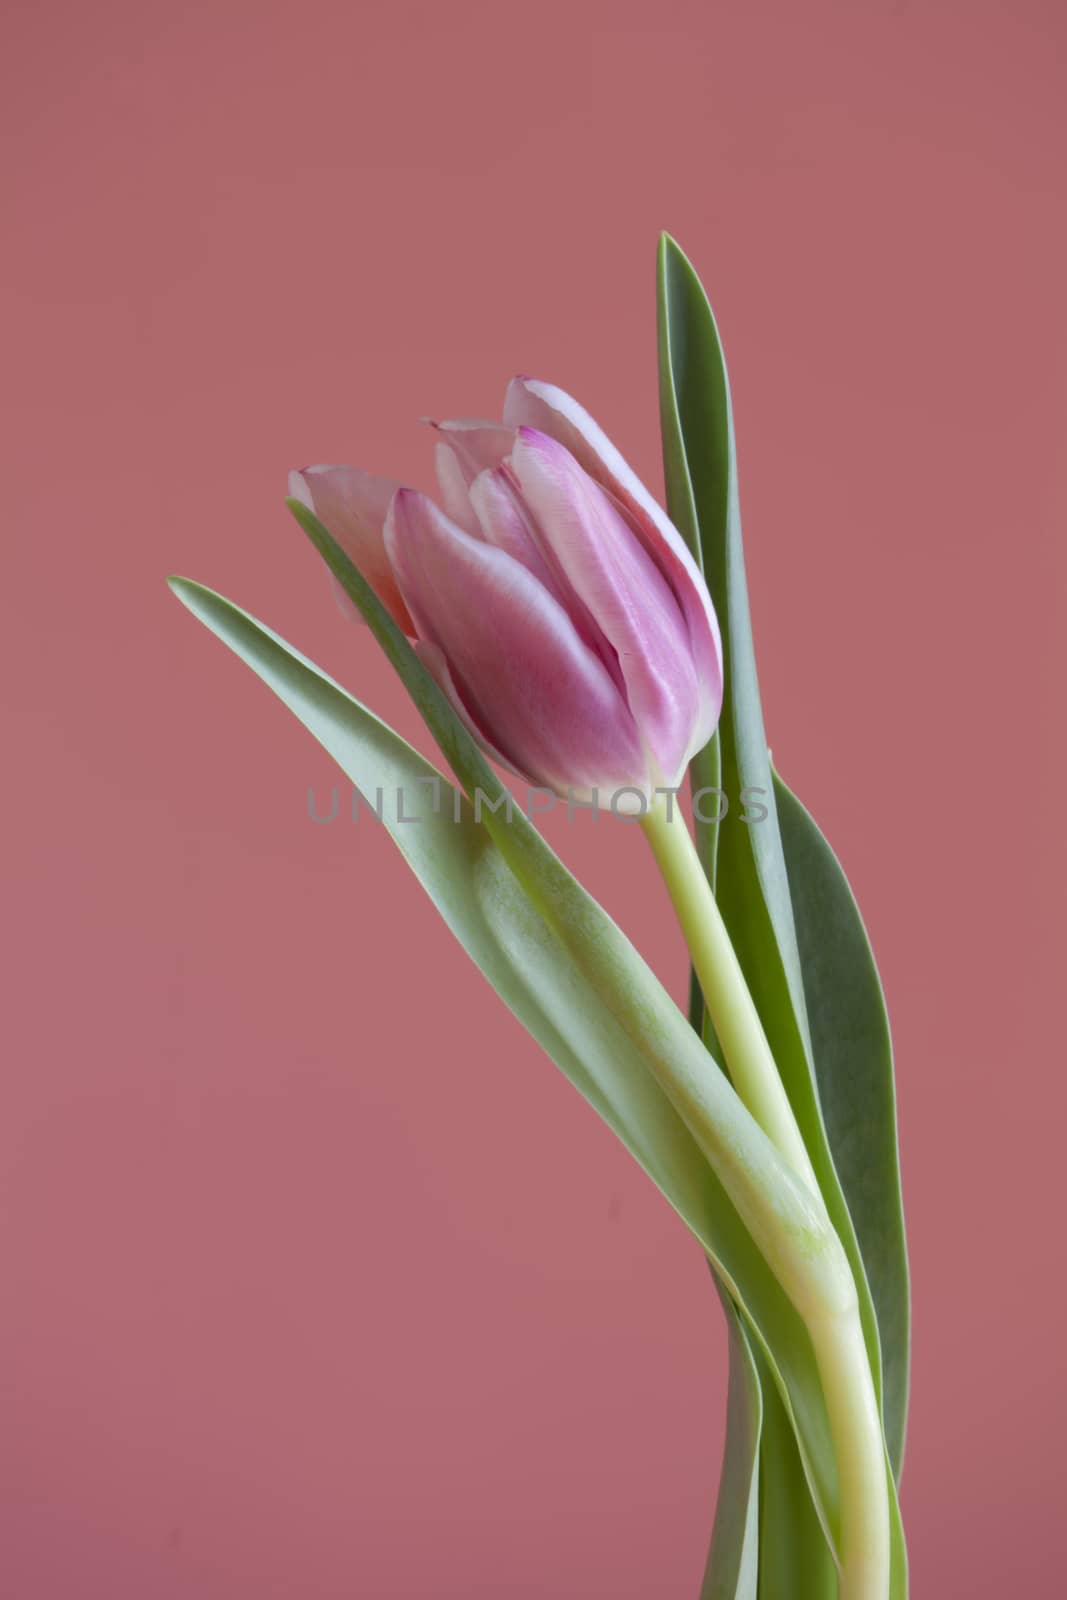 single tulip on  pink background